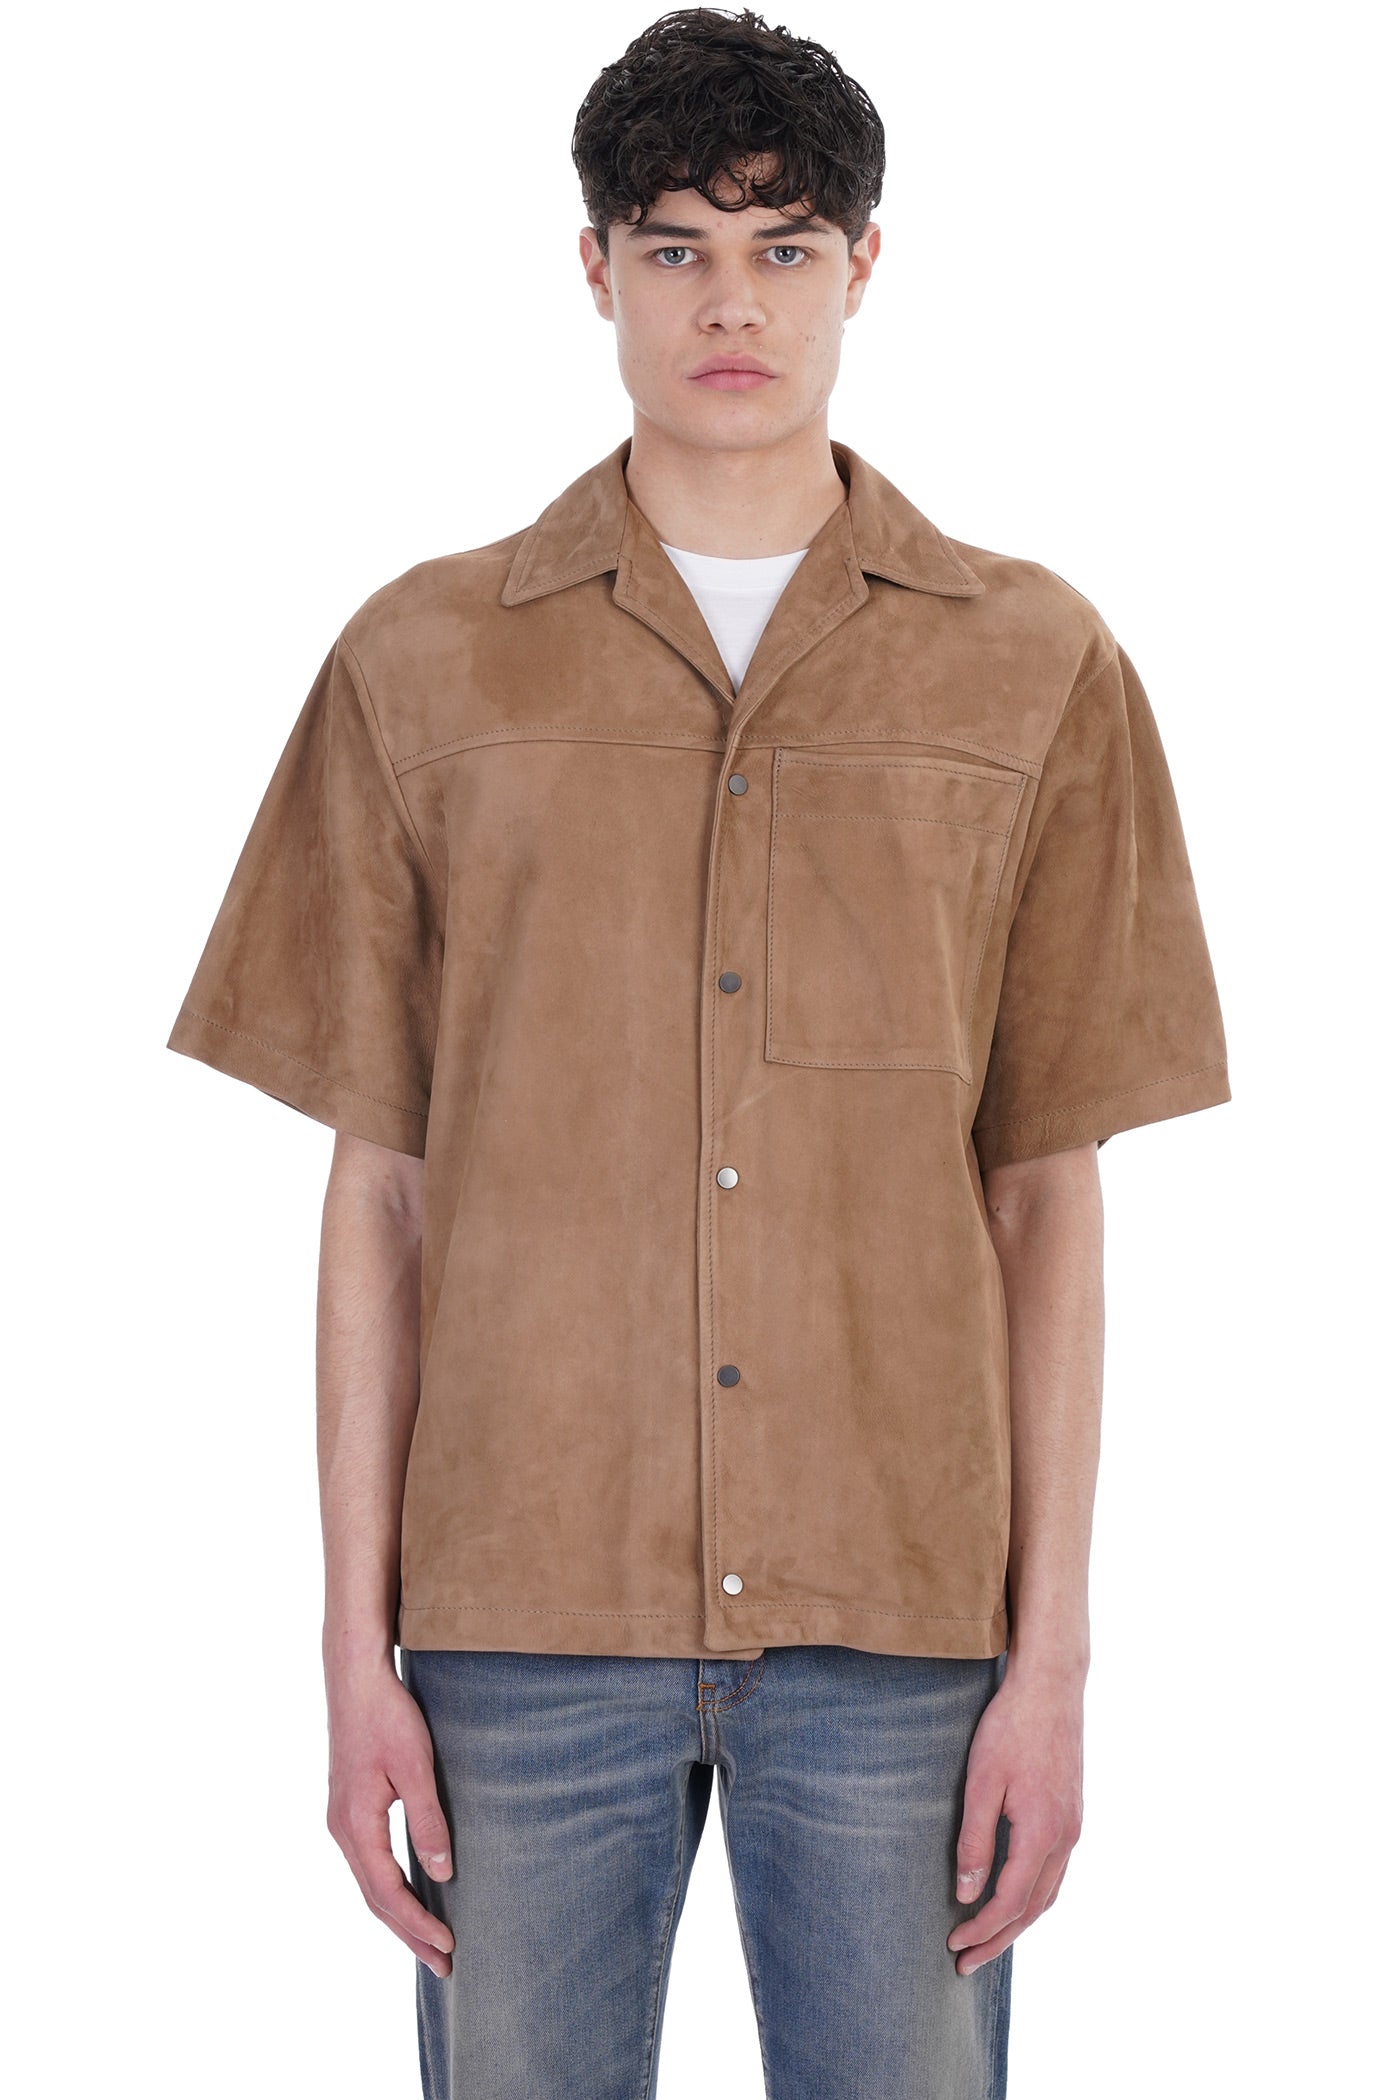 Men's Half Sleeve Suede Leather Shirt In Tan Brown